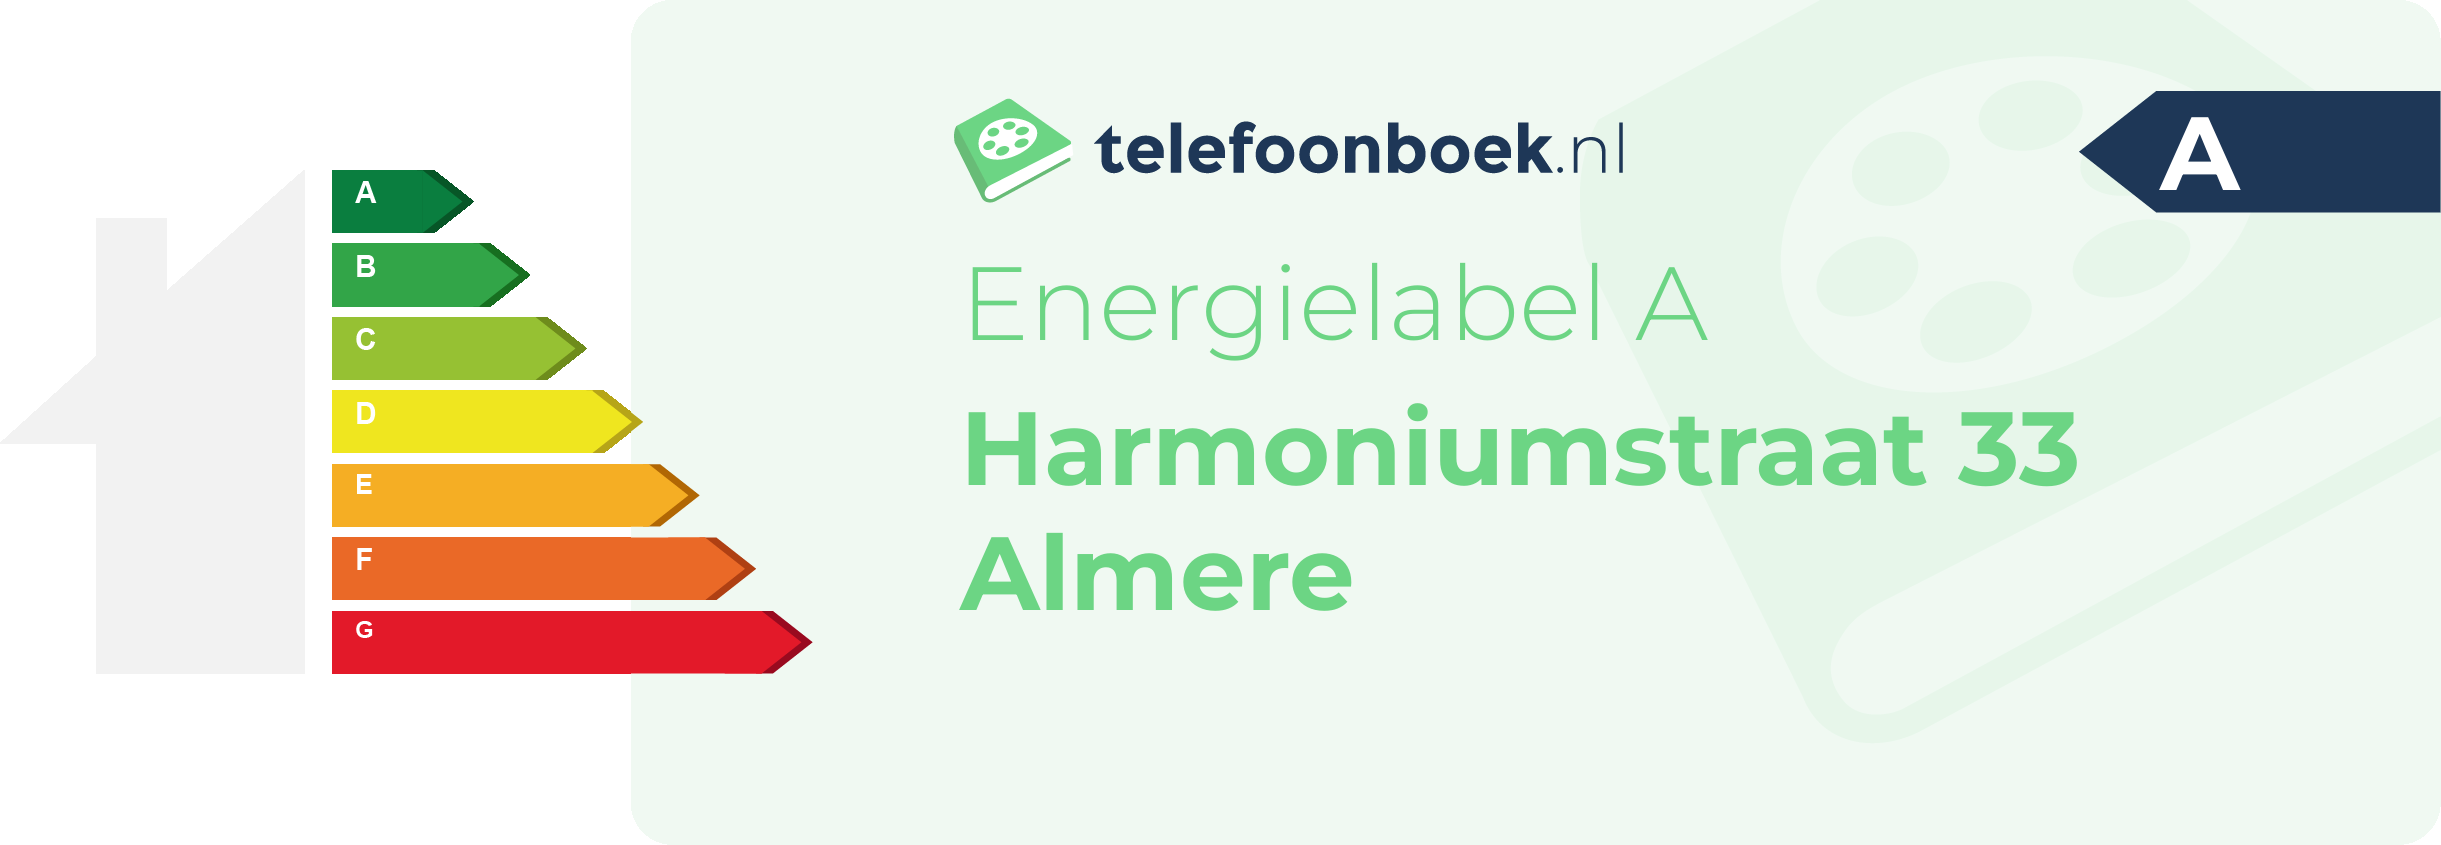 Energielabel Harmoniumstraat 33 Almere